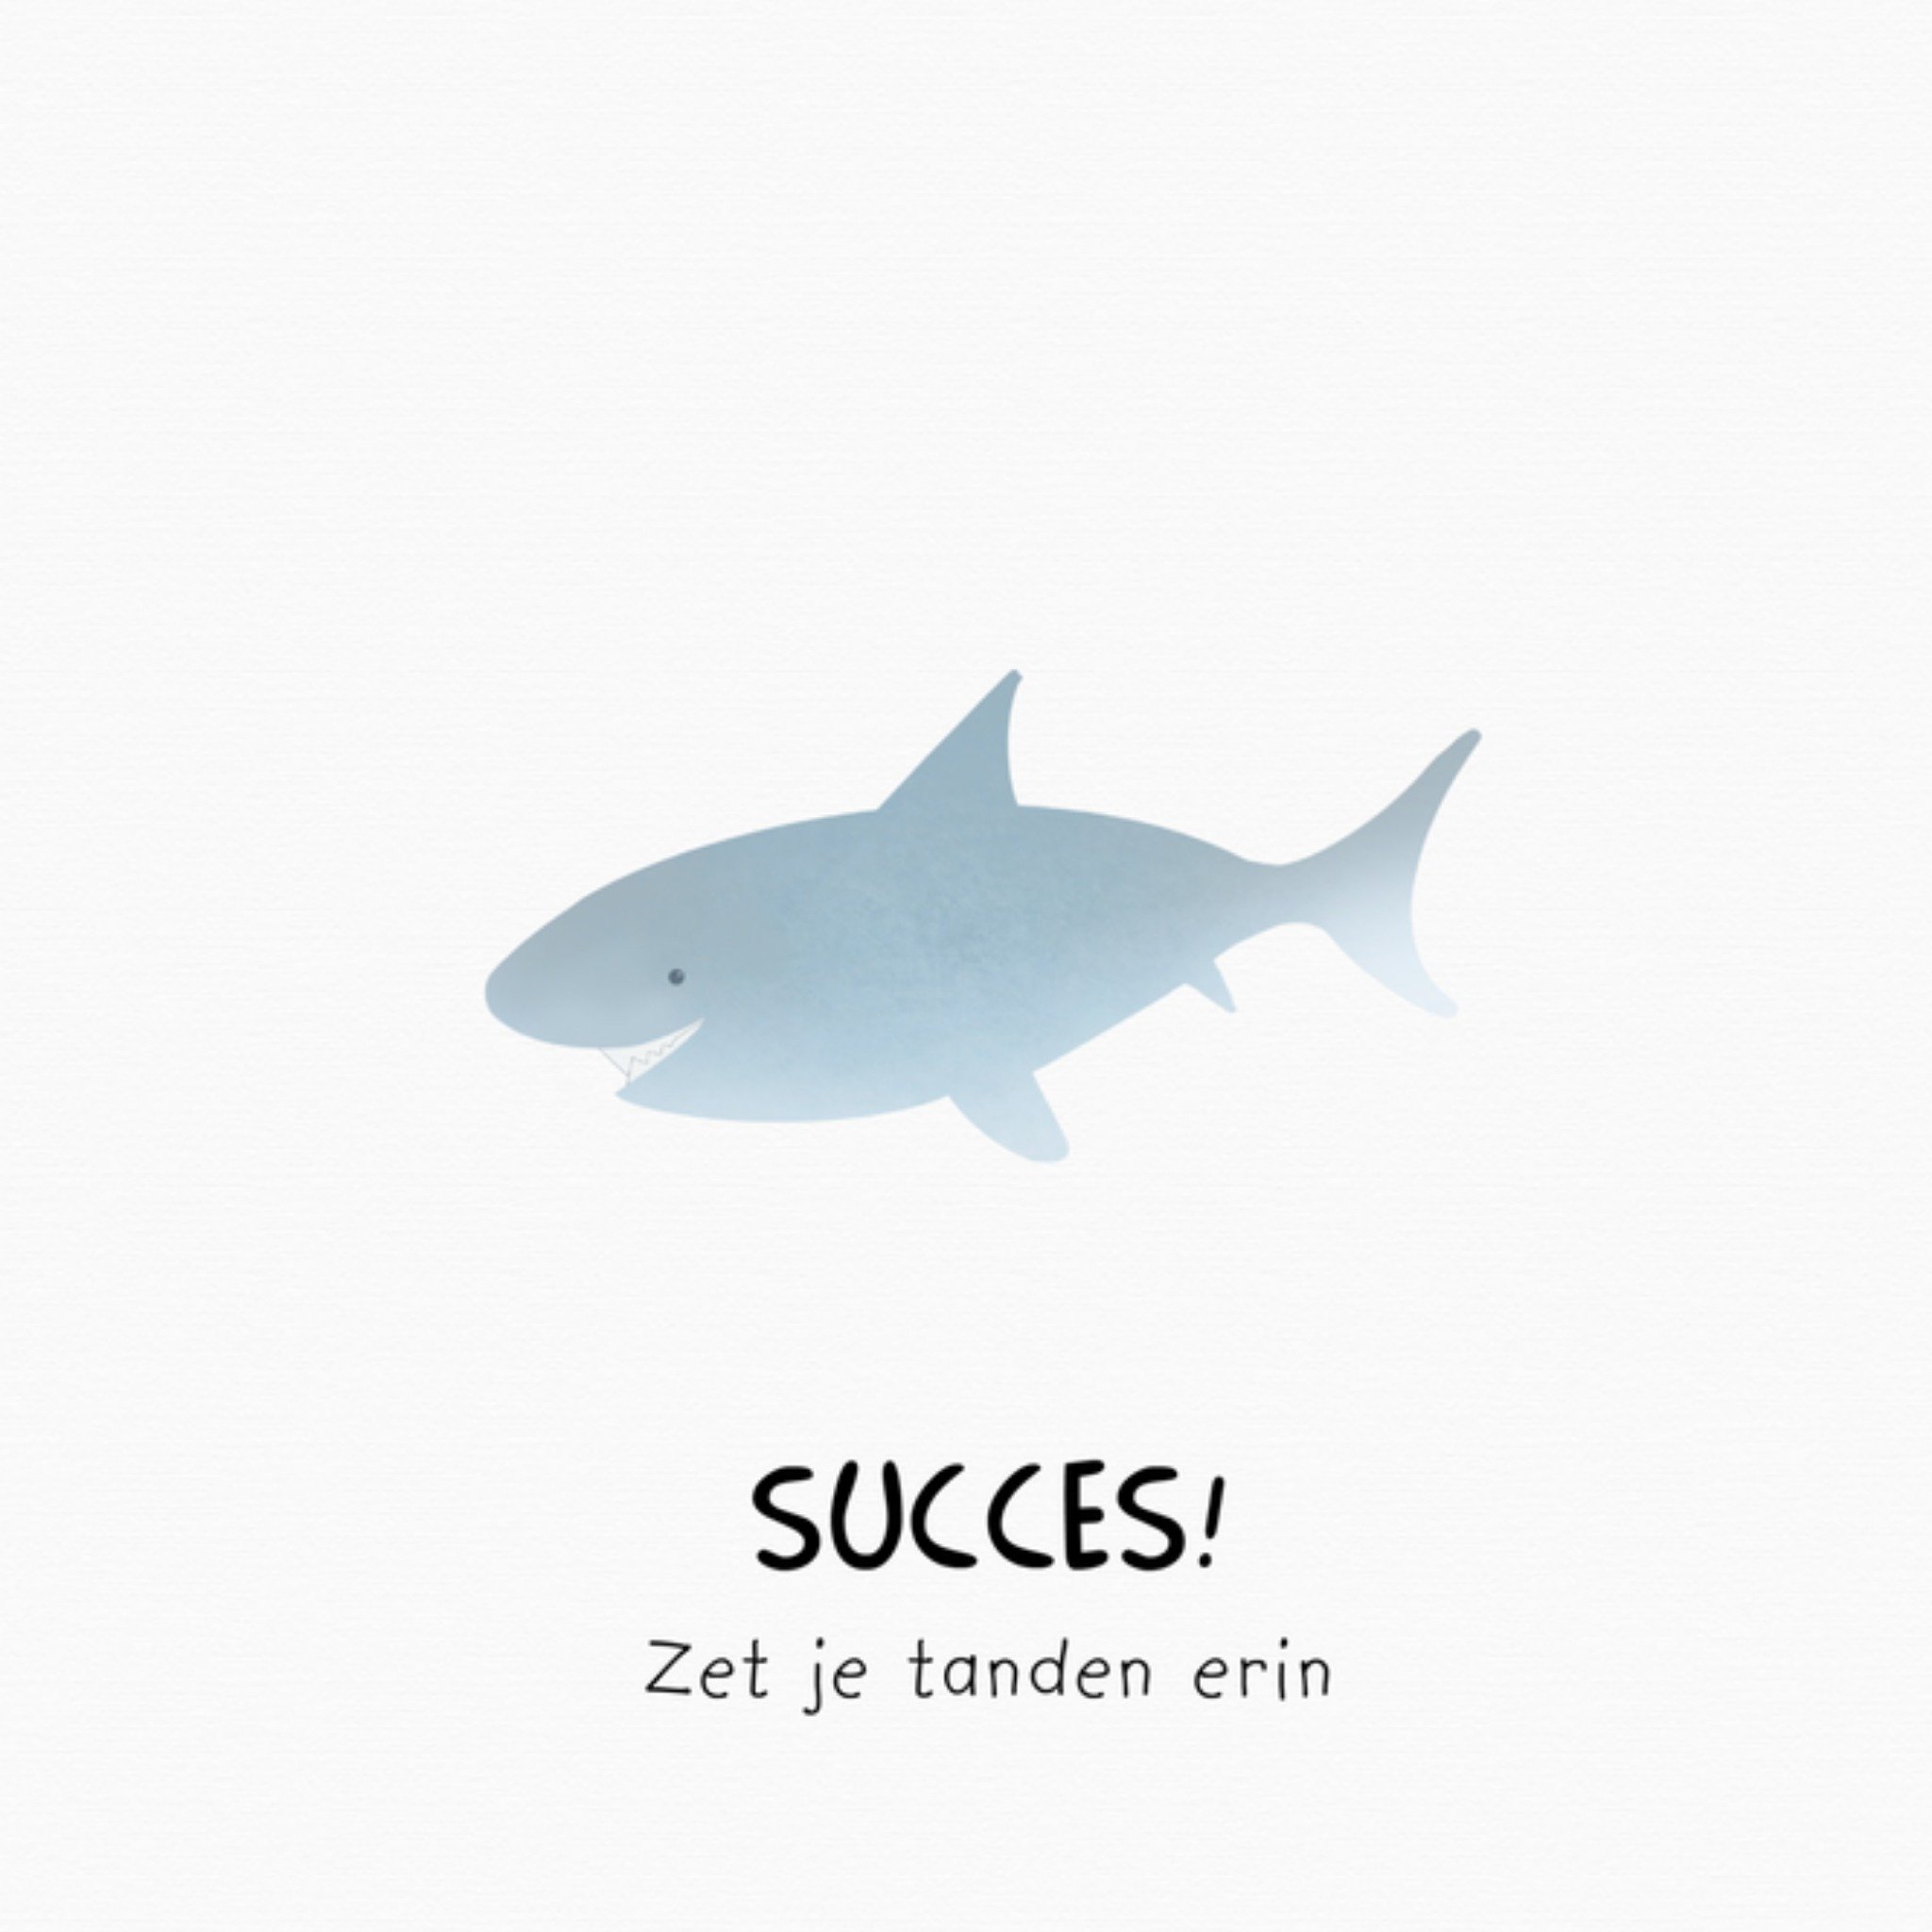 Succeskaart - haai - illustratie